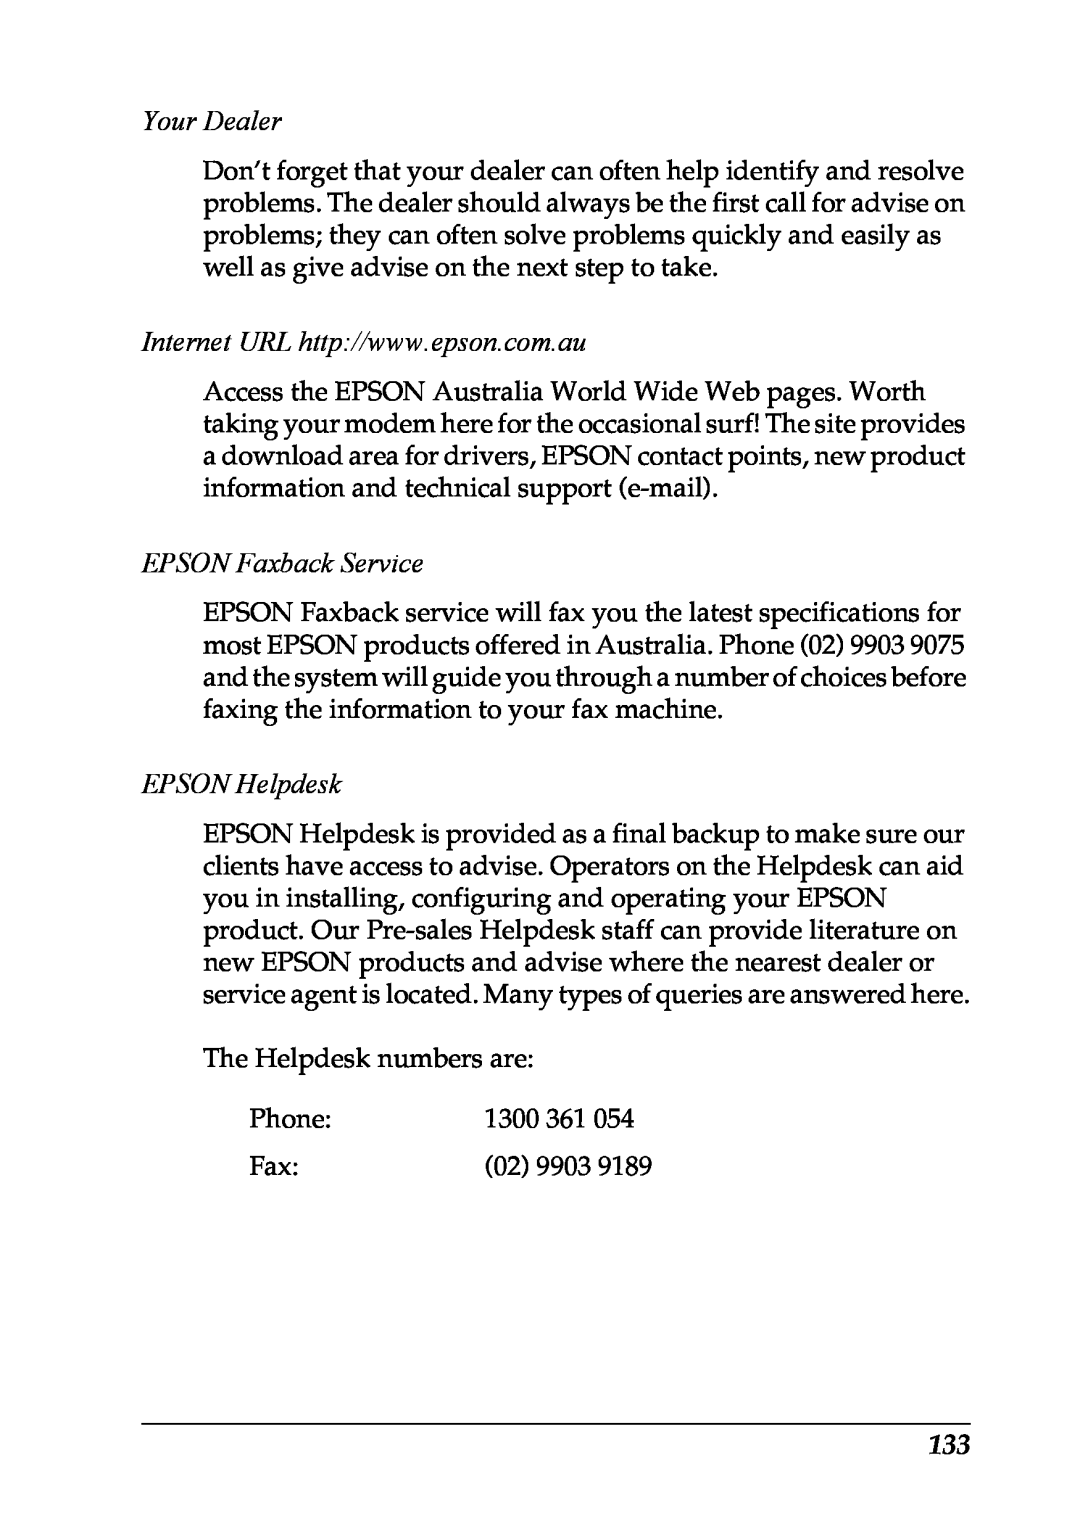 Epson LX-1170 manual Your Dealer, EPSON Faxback Service, EPSON Helpdesk 